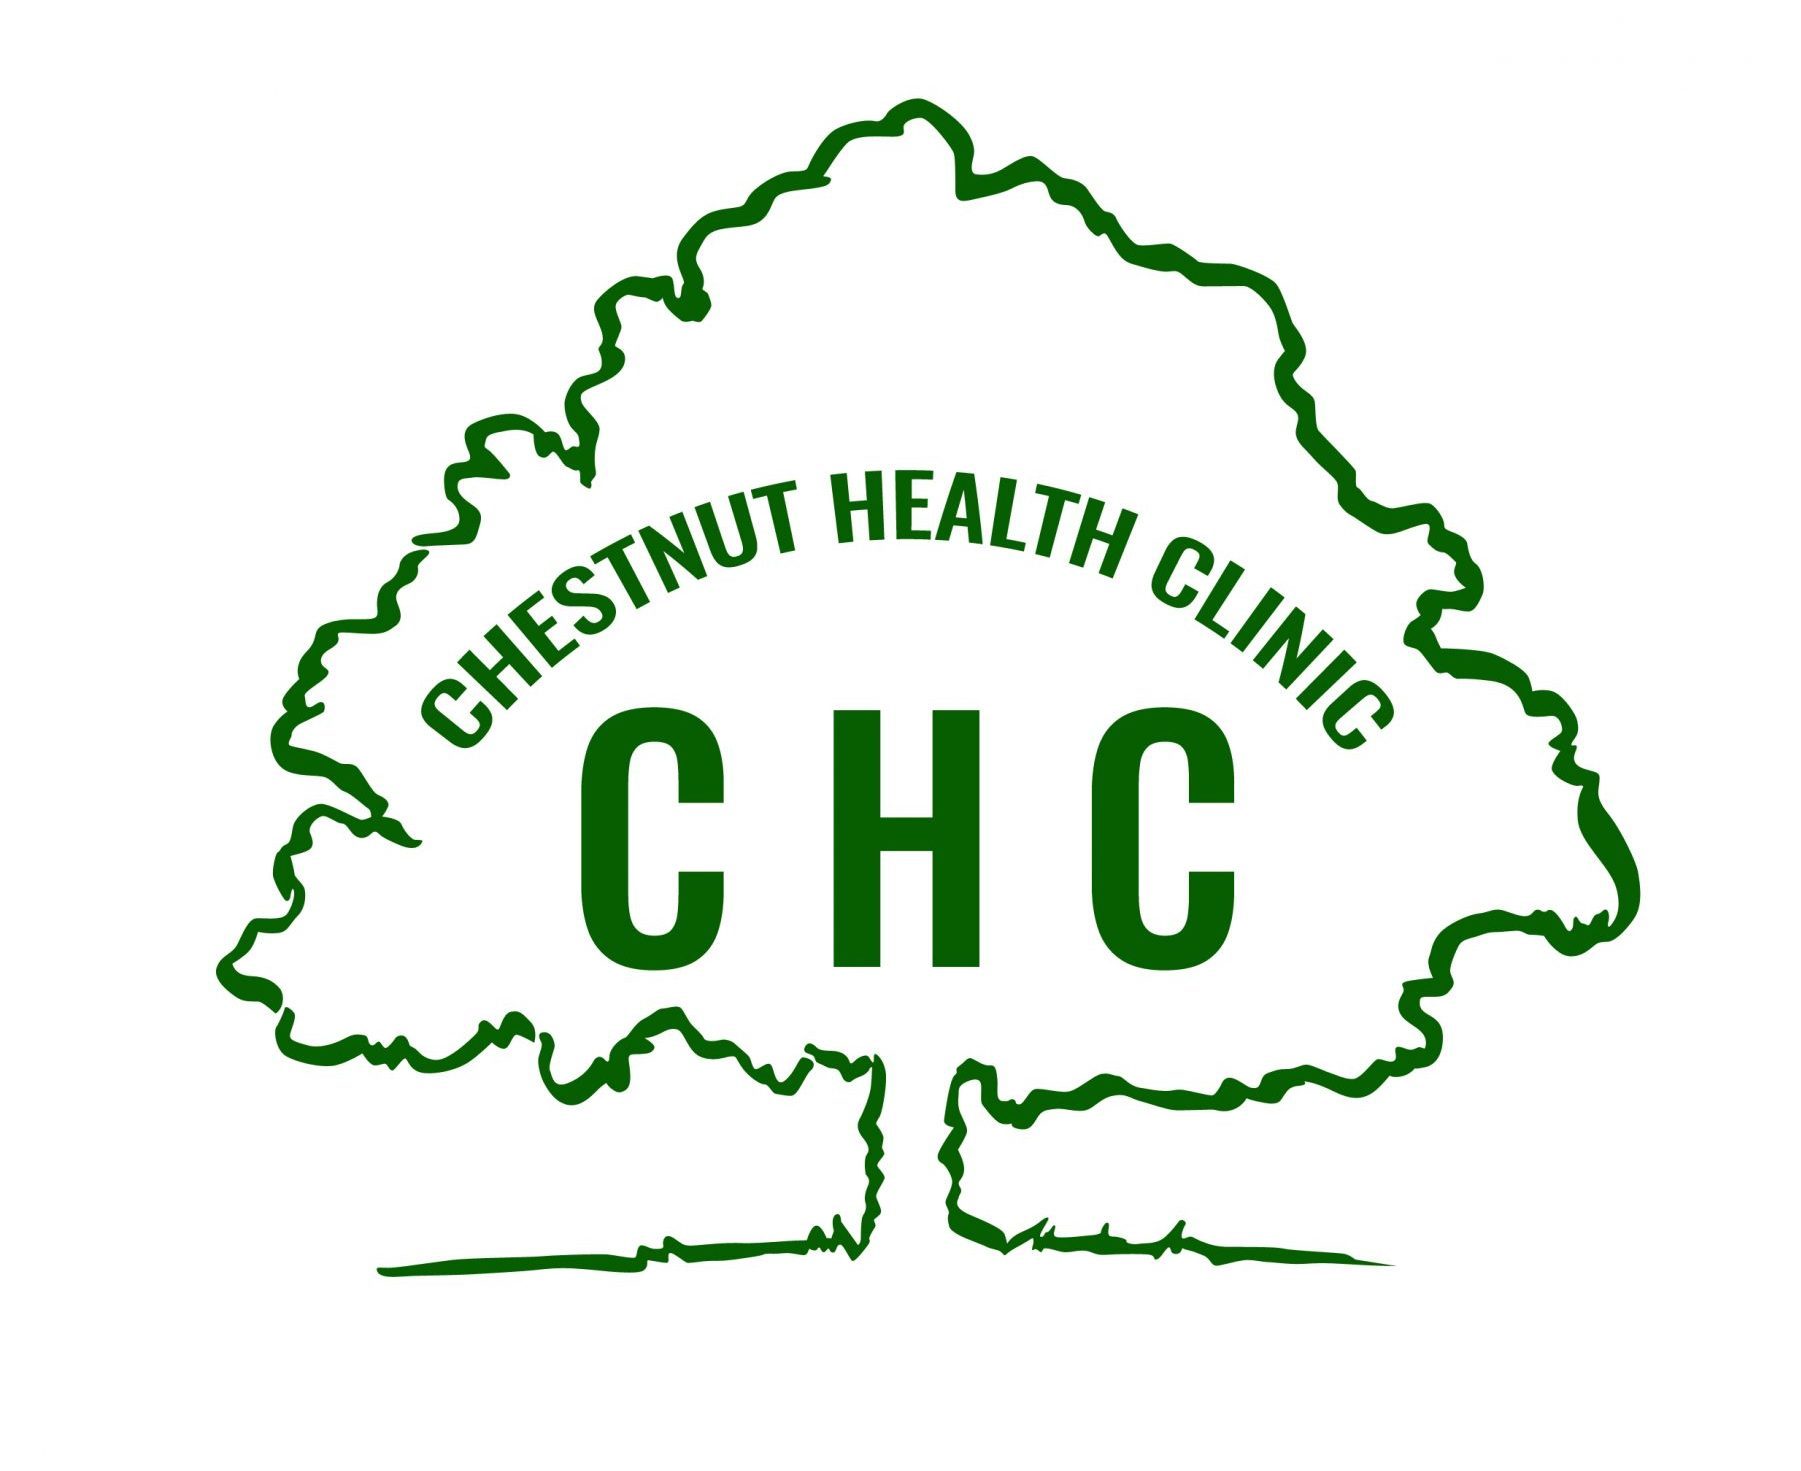 Chestnut-Health-Clinic-Logo-copy-scaled-e1655723485993